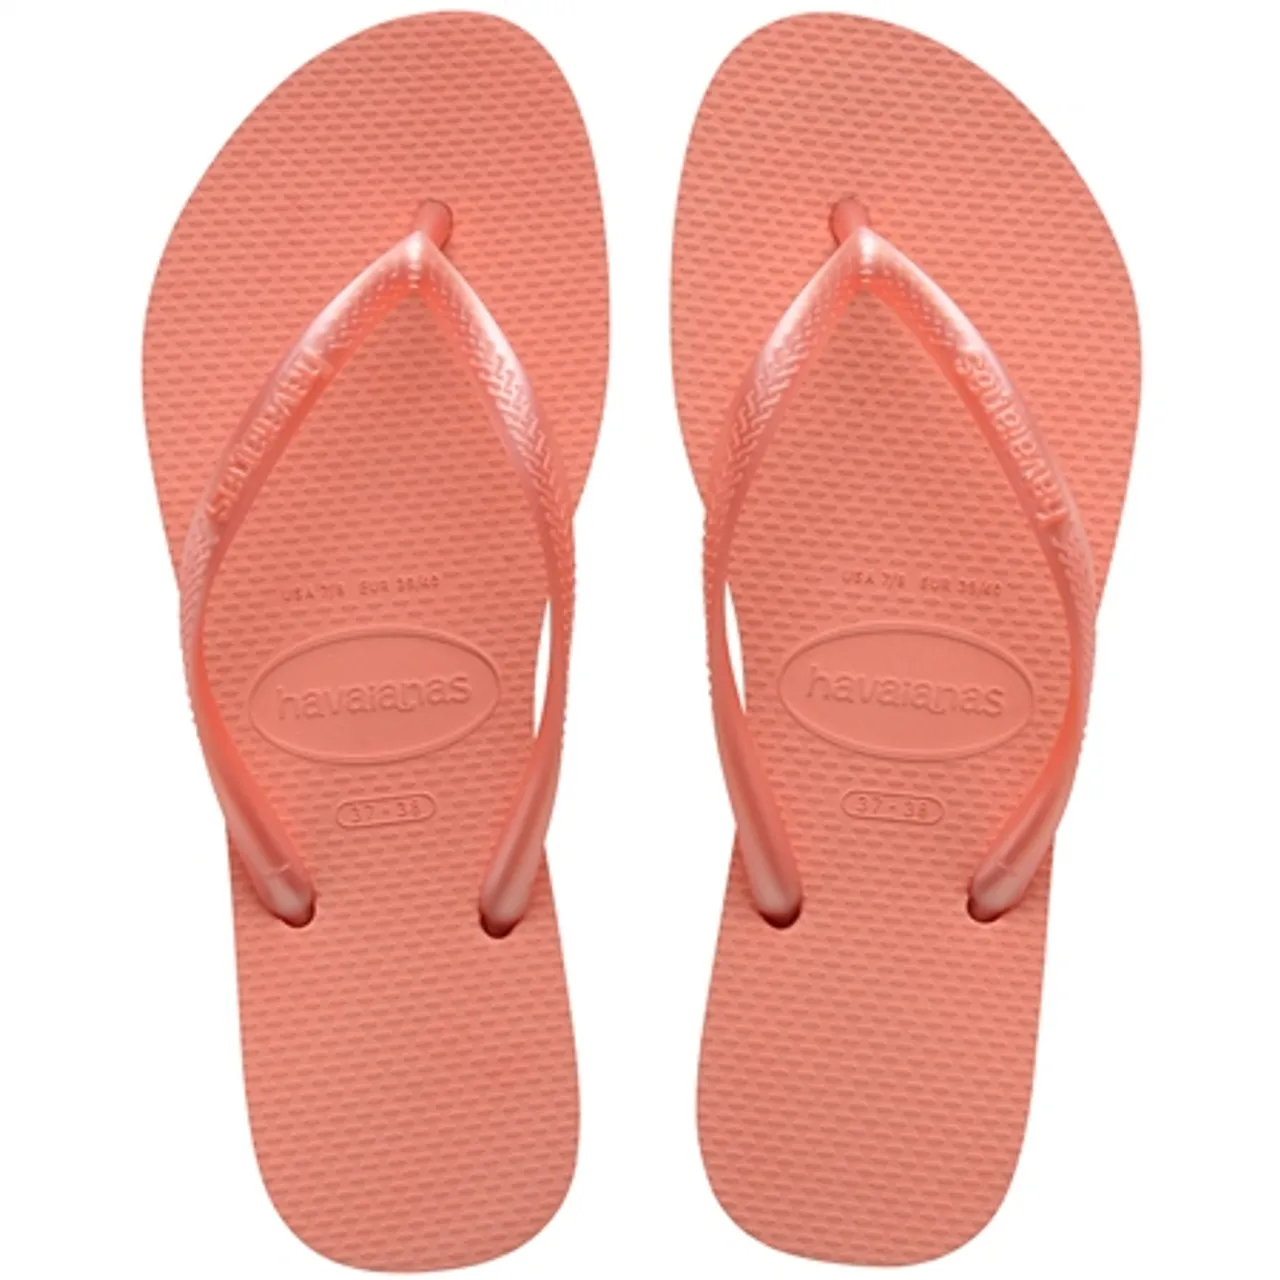 Havaianas Slim Flip Flops - Peach Rose - UK 3-4 (EU 35/36)